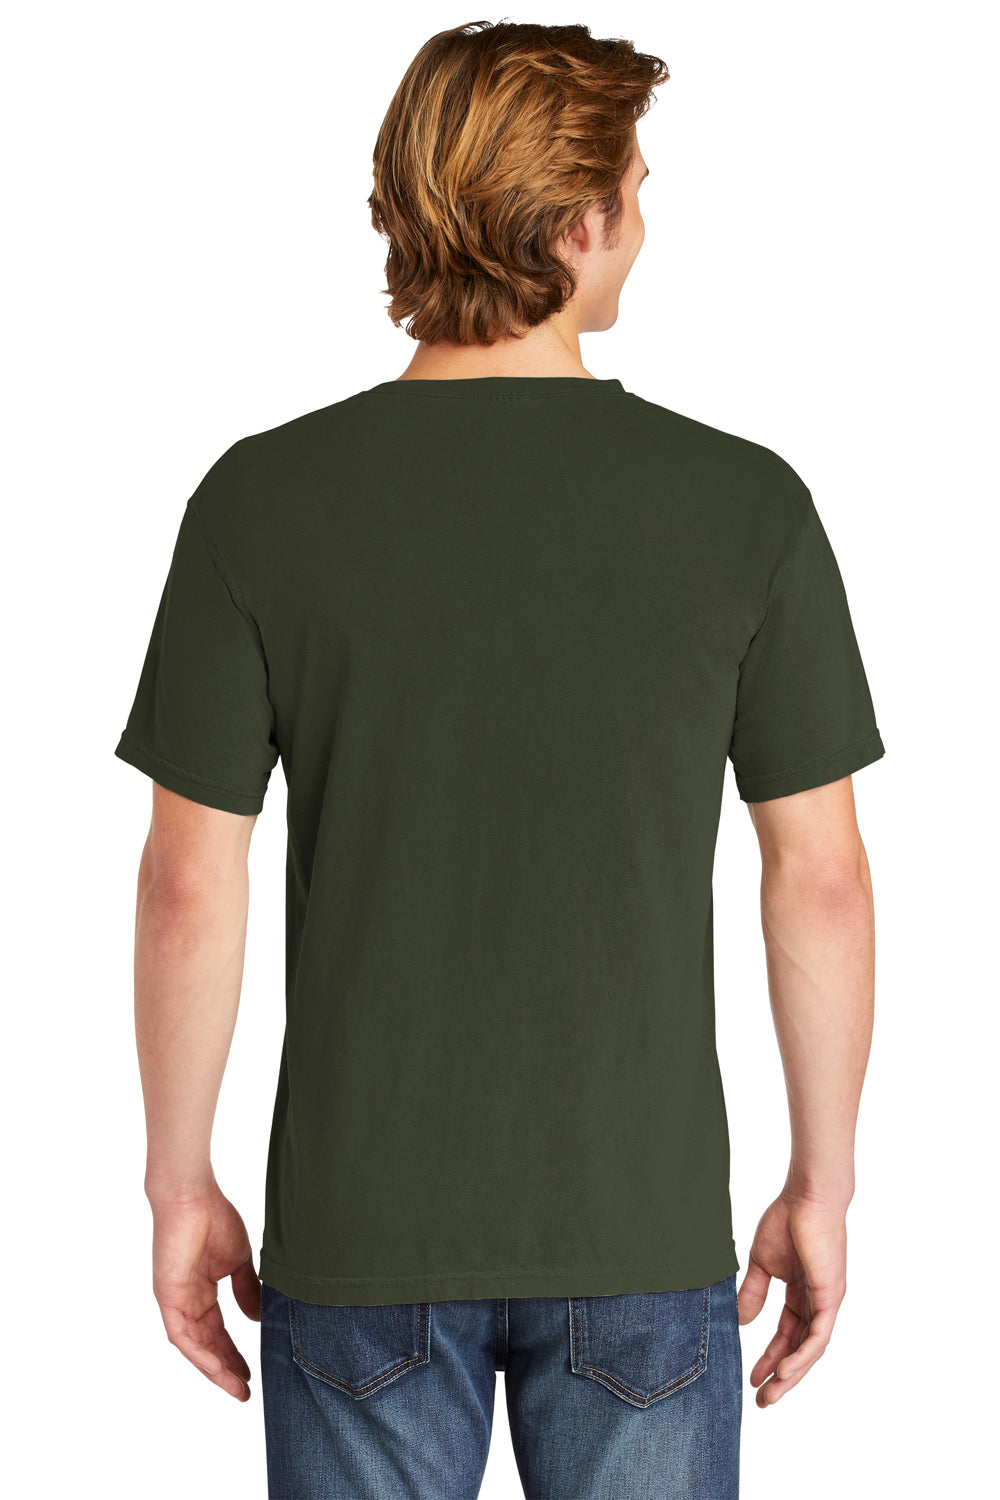 Comfort Colors 1717/C1717 Mens Short Sleeve Crewneck T-Shirt Hemp Green Back